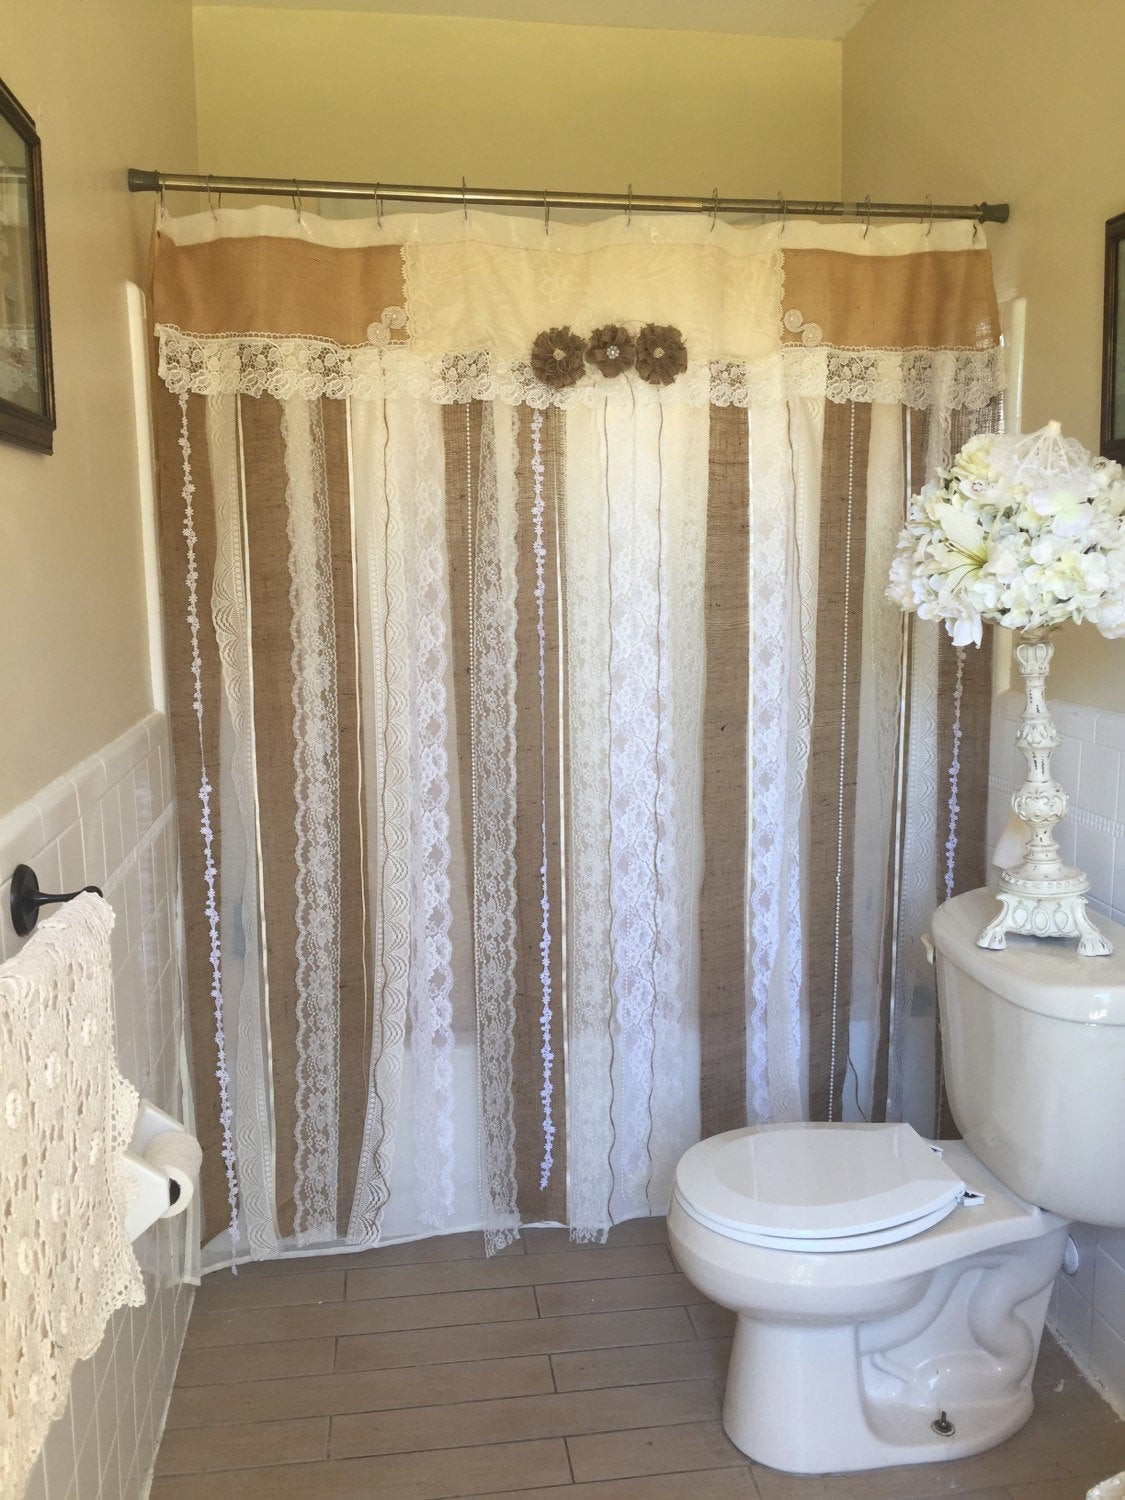 Rustic Bathroom Shower Curtain
 72 SHABBY Rustic Chic Burlap SHOWER Curtain Lace Ruffles